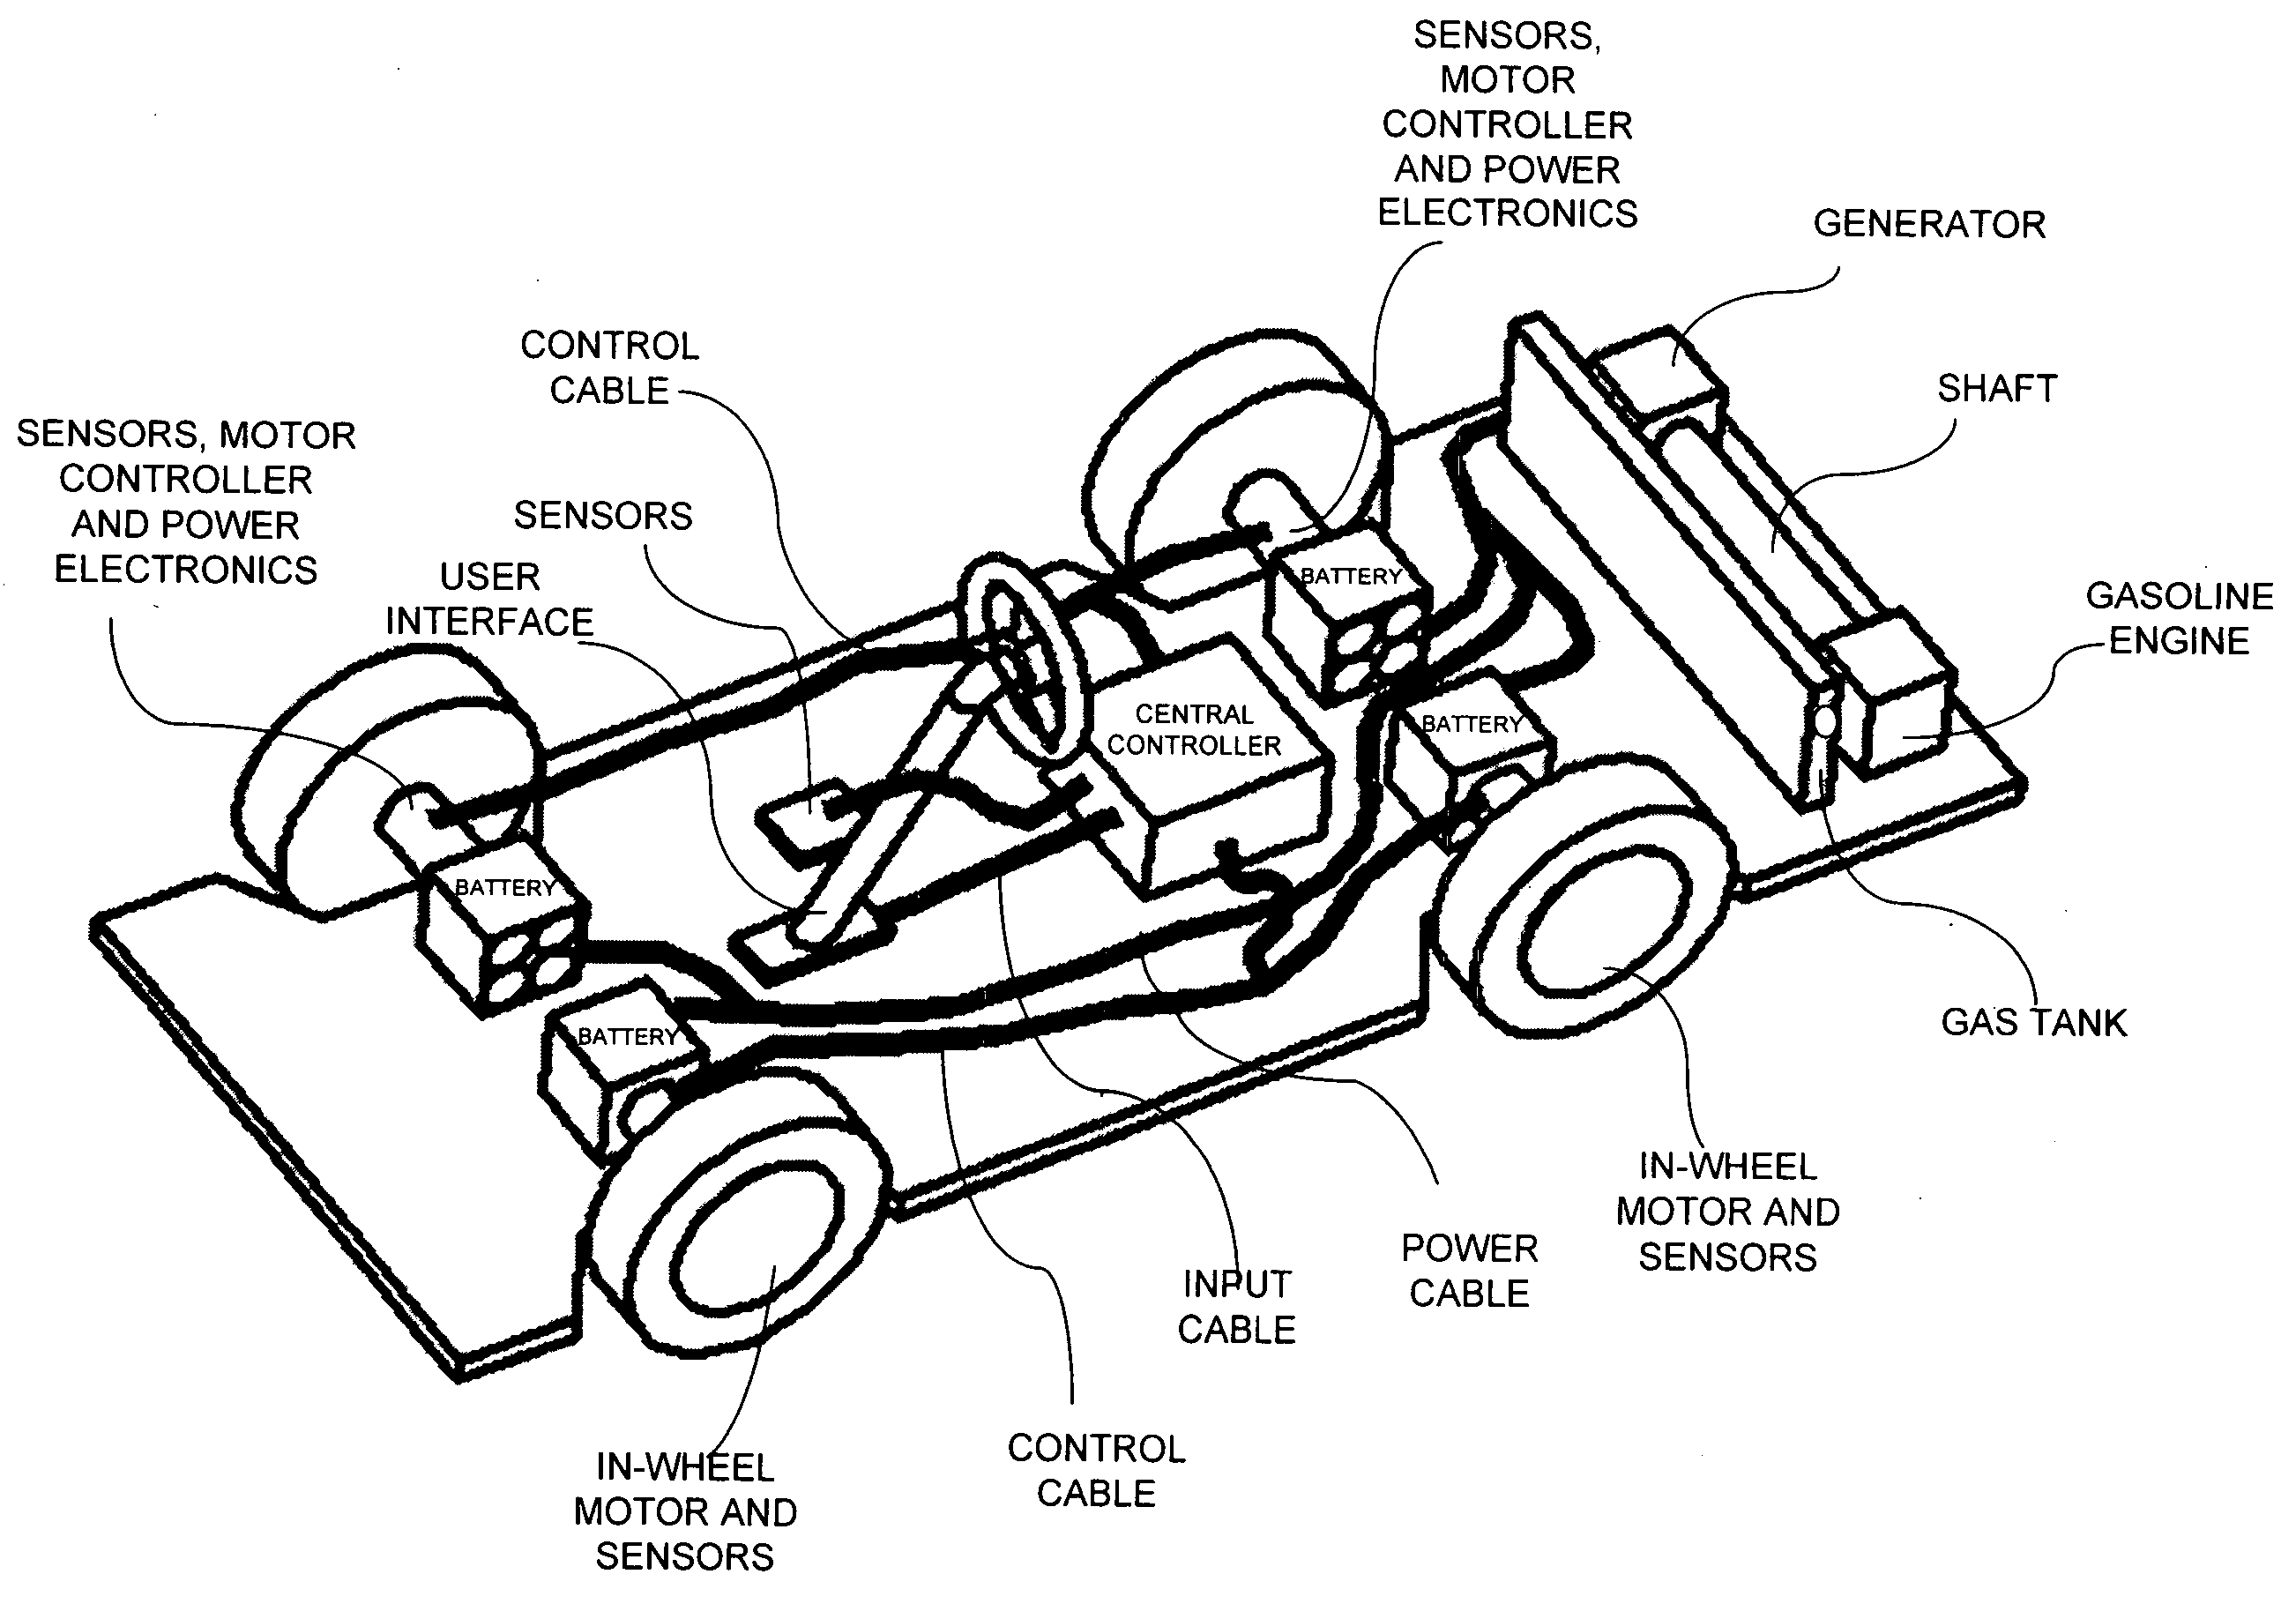 In-wheel electric motors